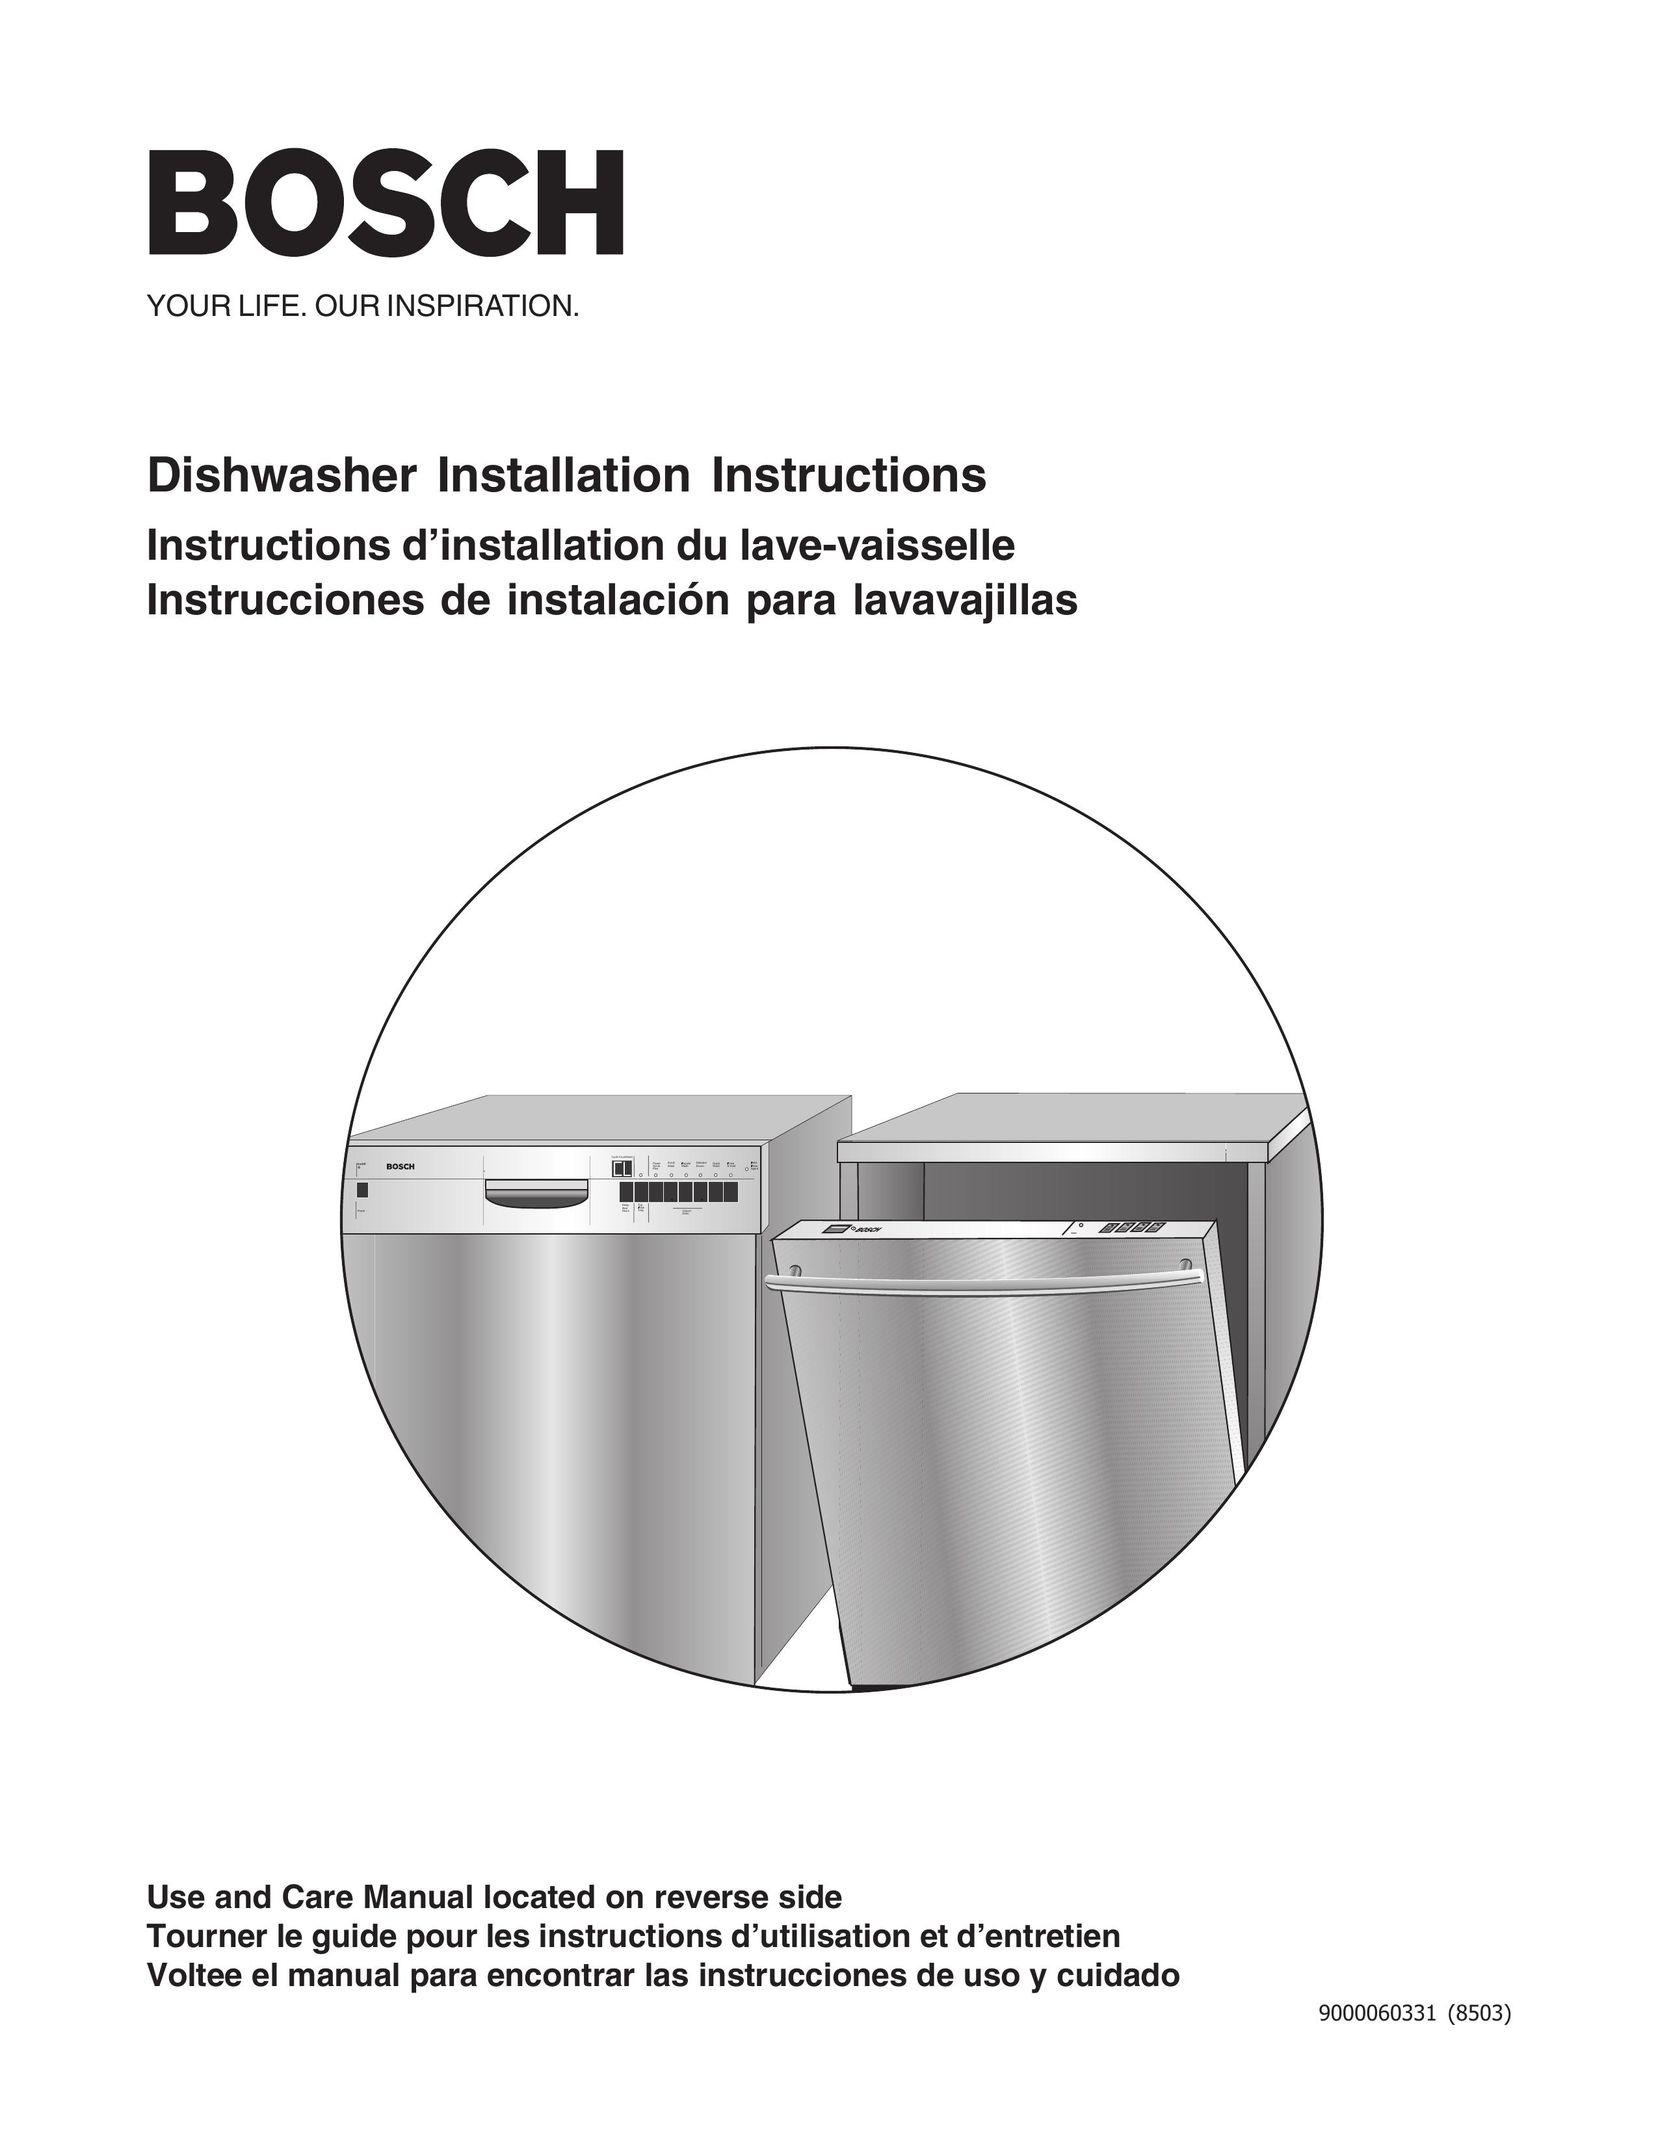 Bosch Appliances 9000060331 (8503) Dishwasher User Manual